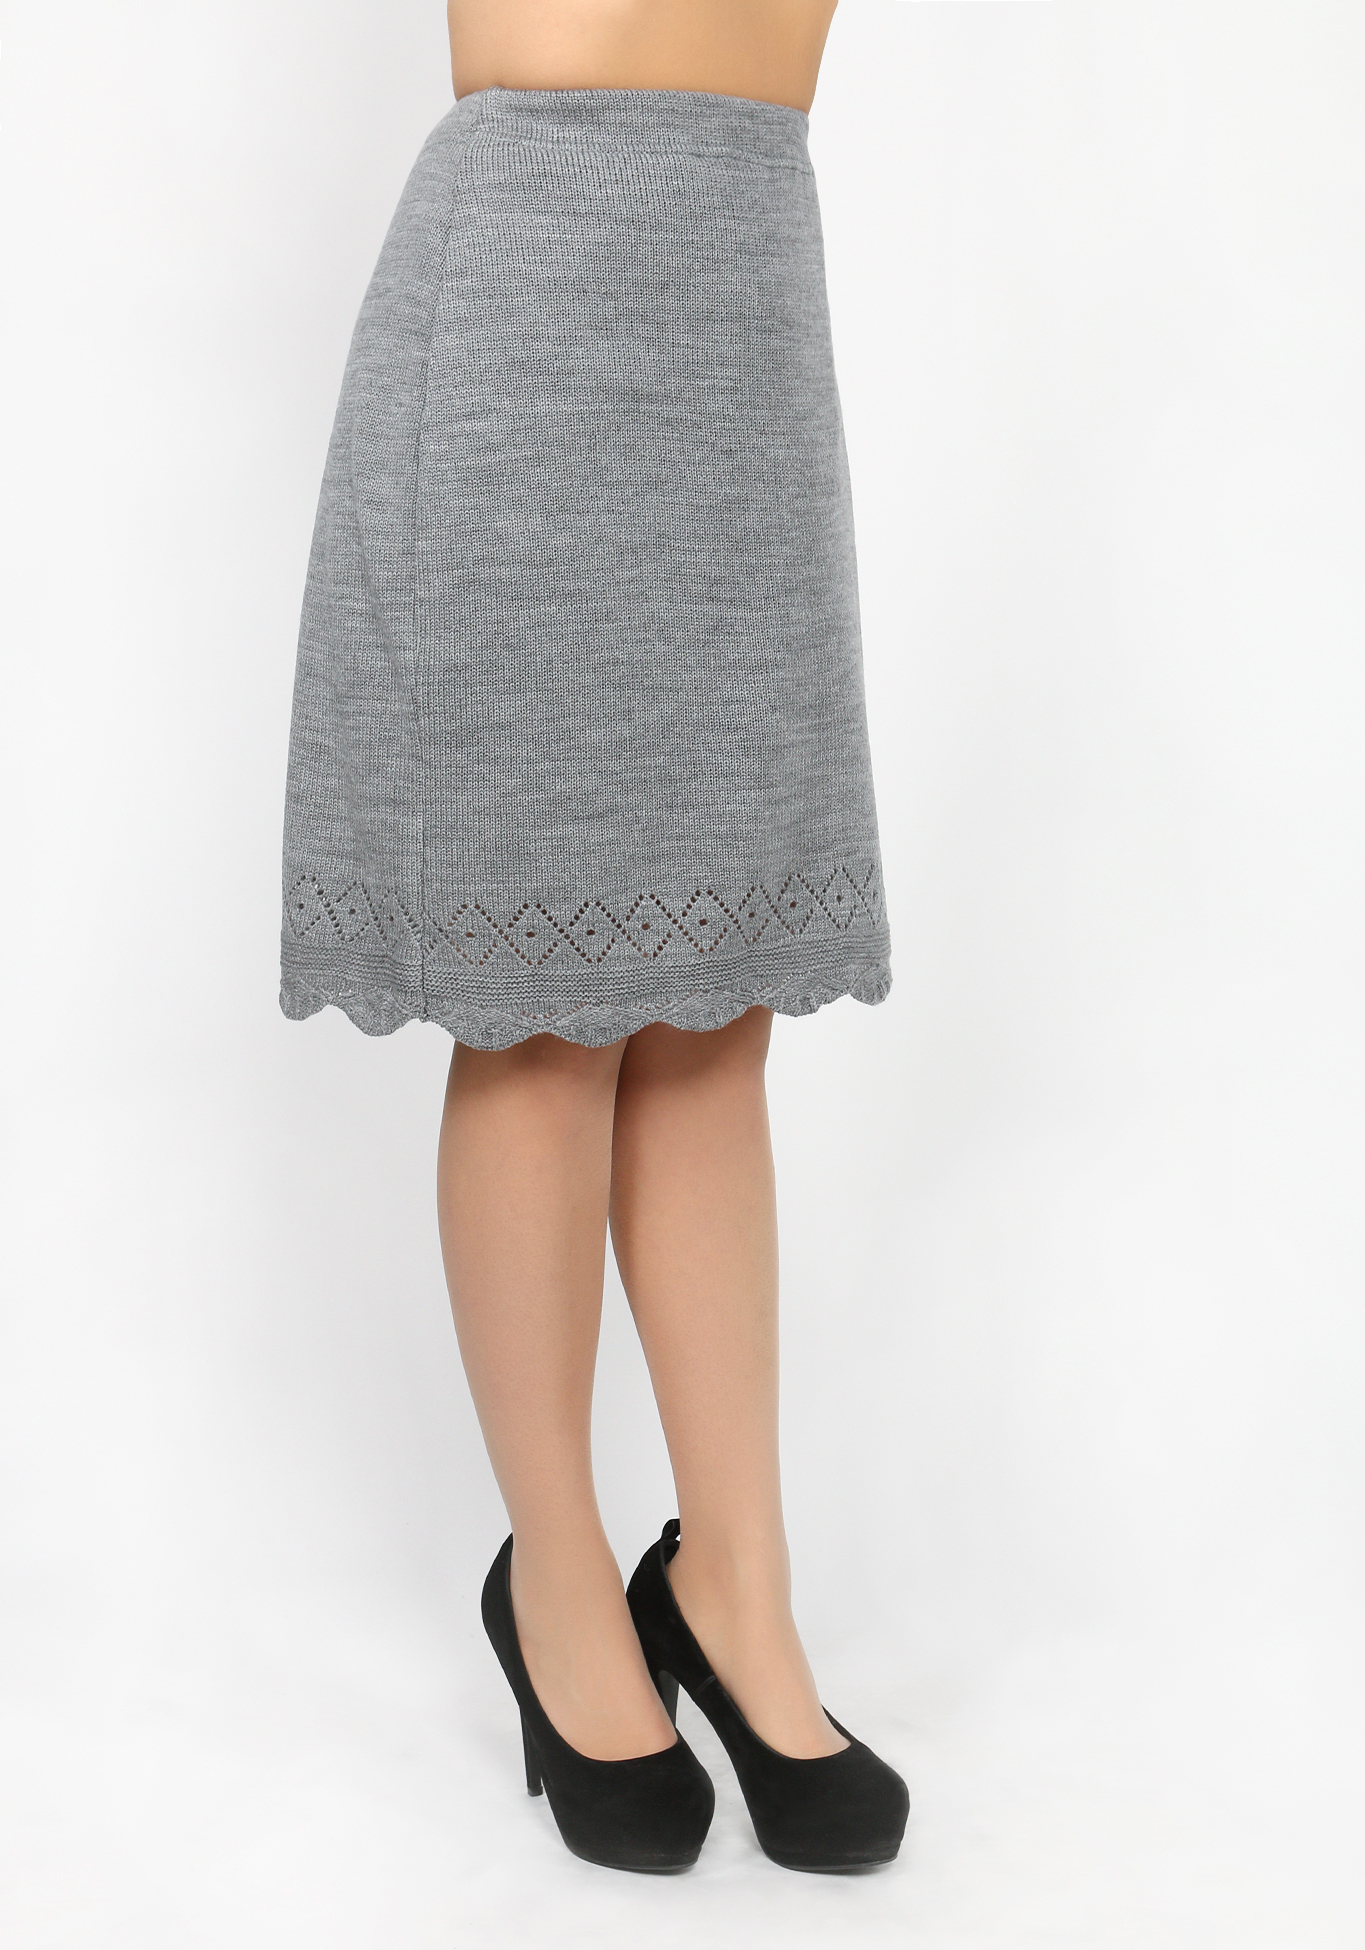 Юбка вязаная с узором на резинке Milana Style, размер 48, цвет серый - фото 8